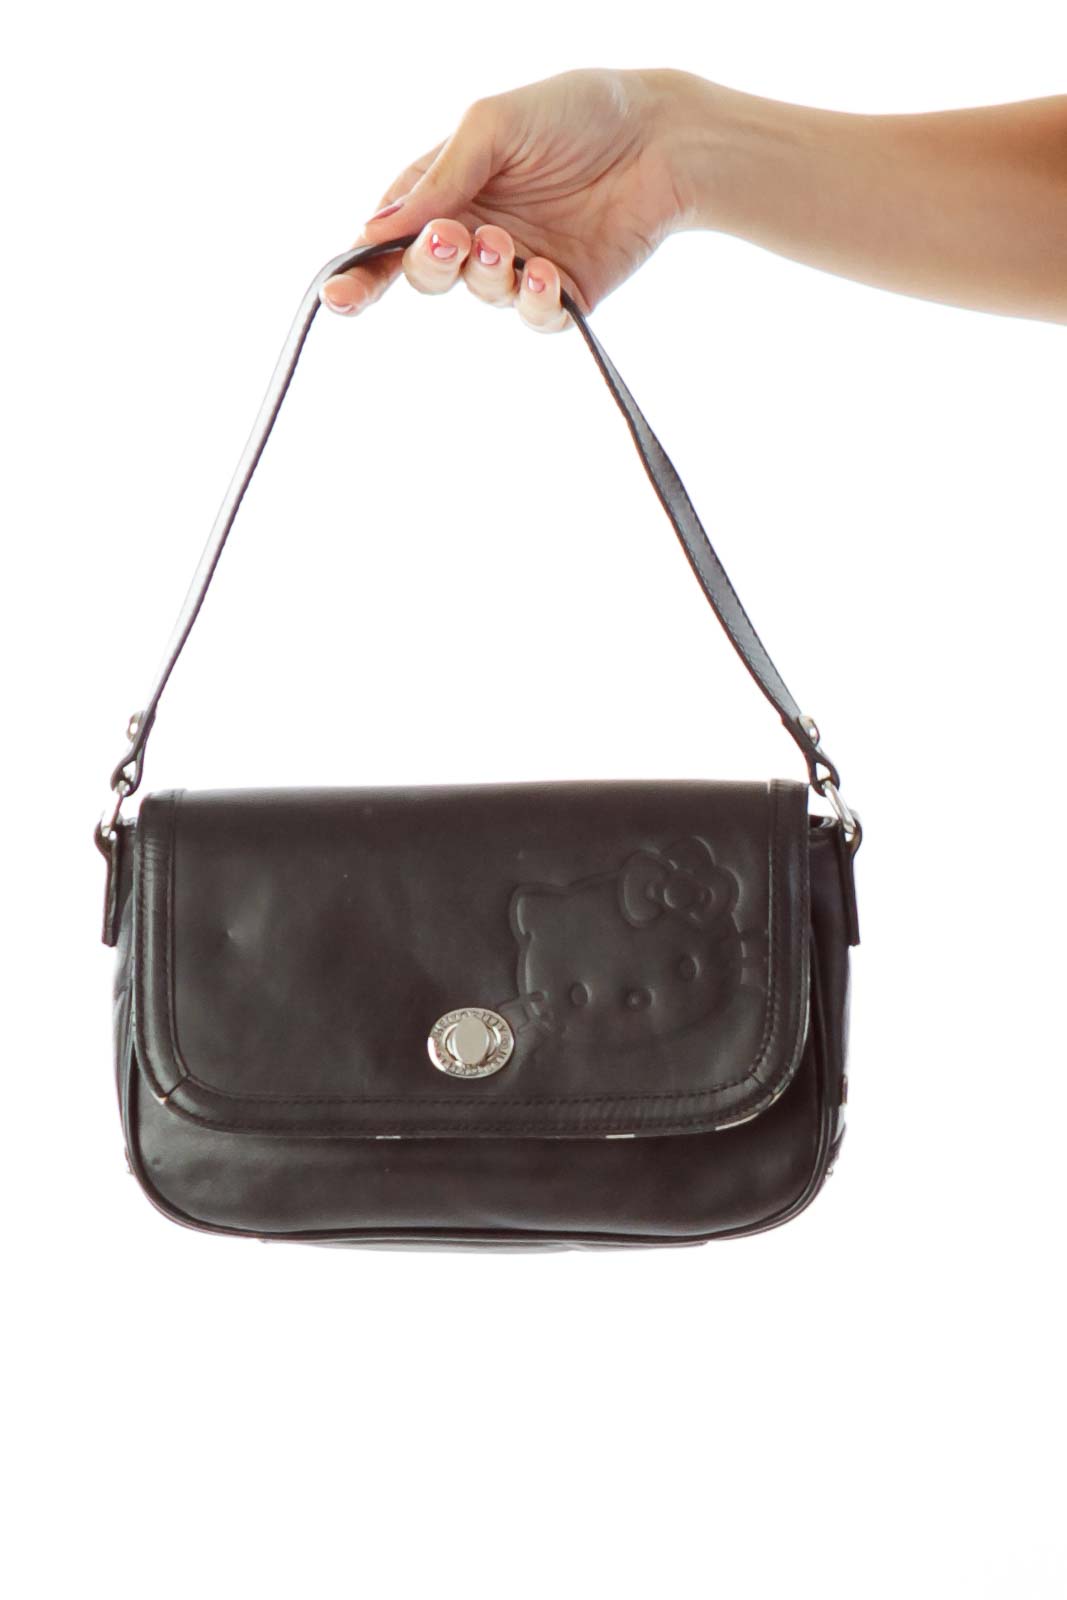 Black Leather Hello Kitty Shoulder Bag Front